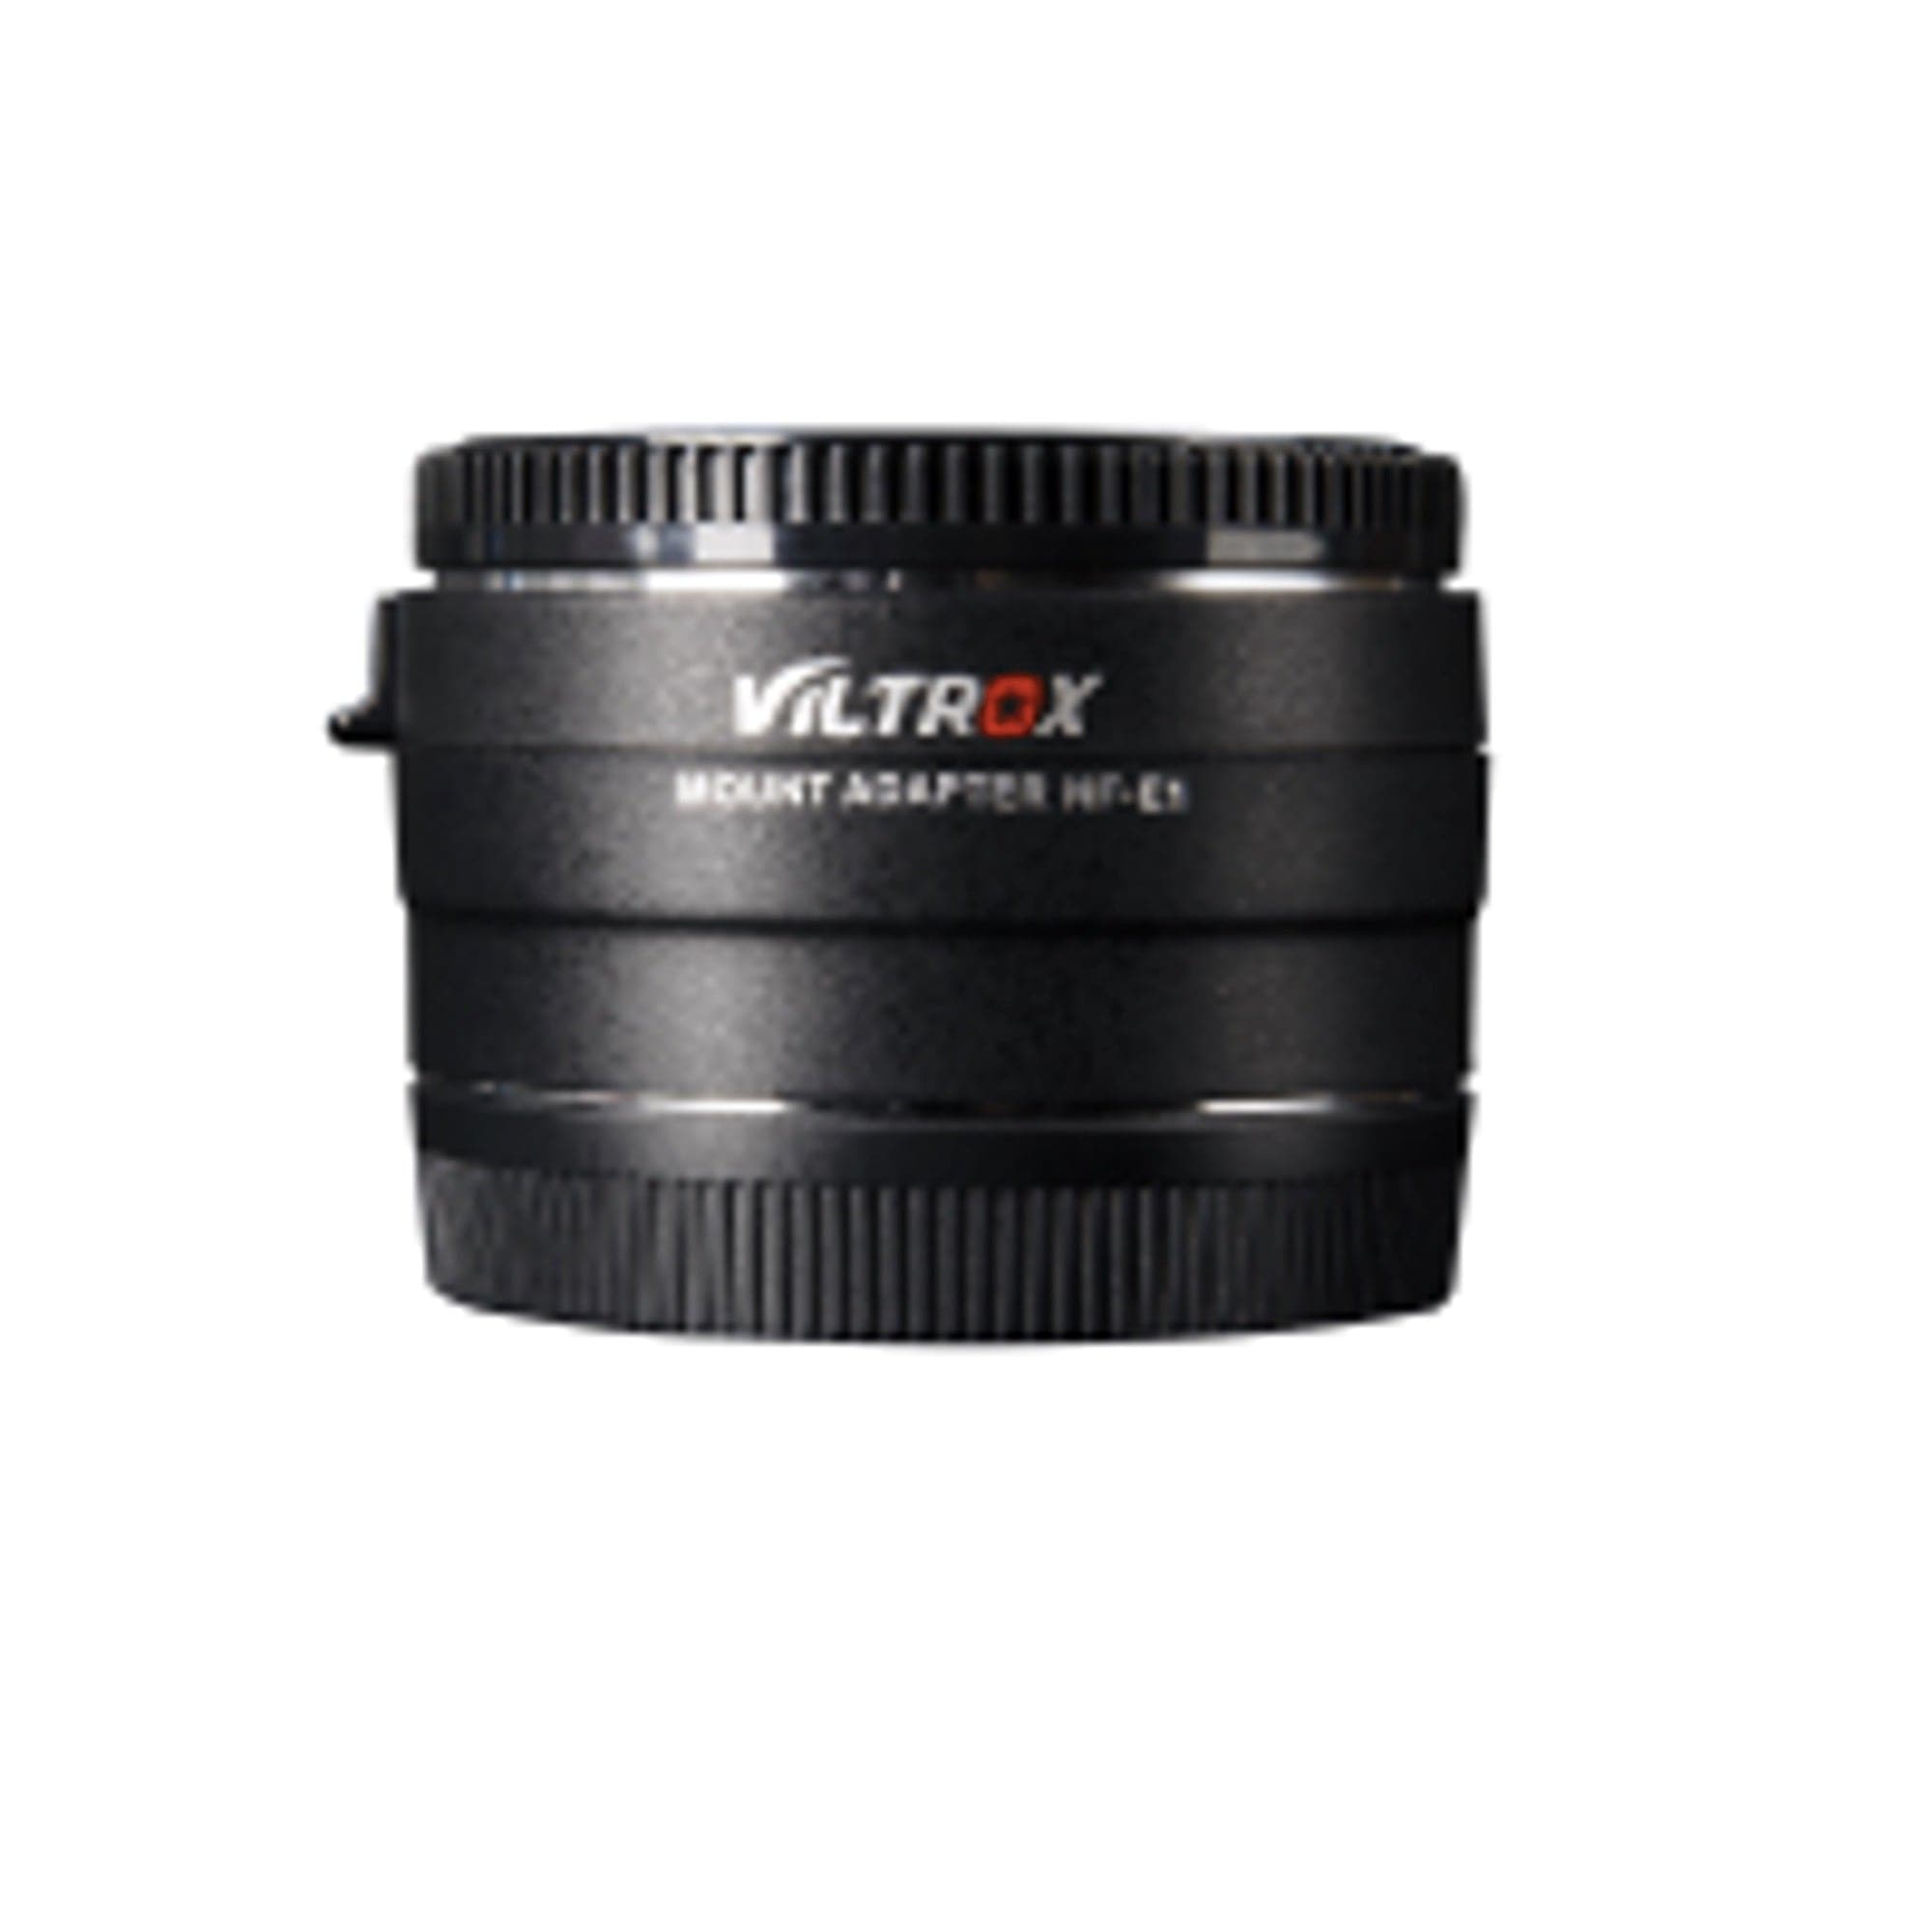 VILTROX NF-E1 Lens Mount Adapter for Nikon F Lens to Sony E Mount